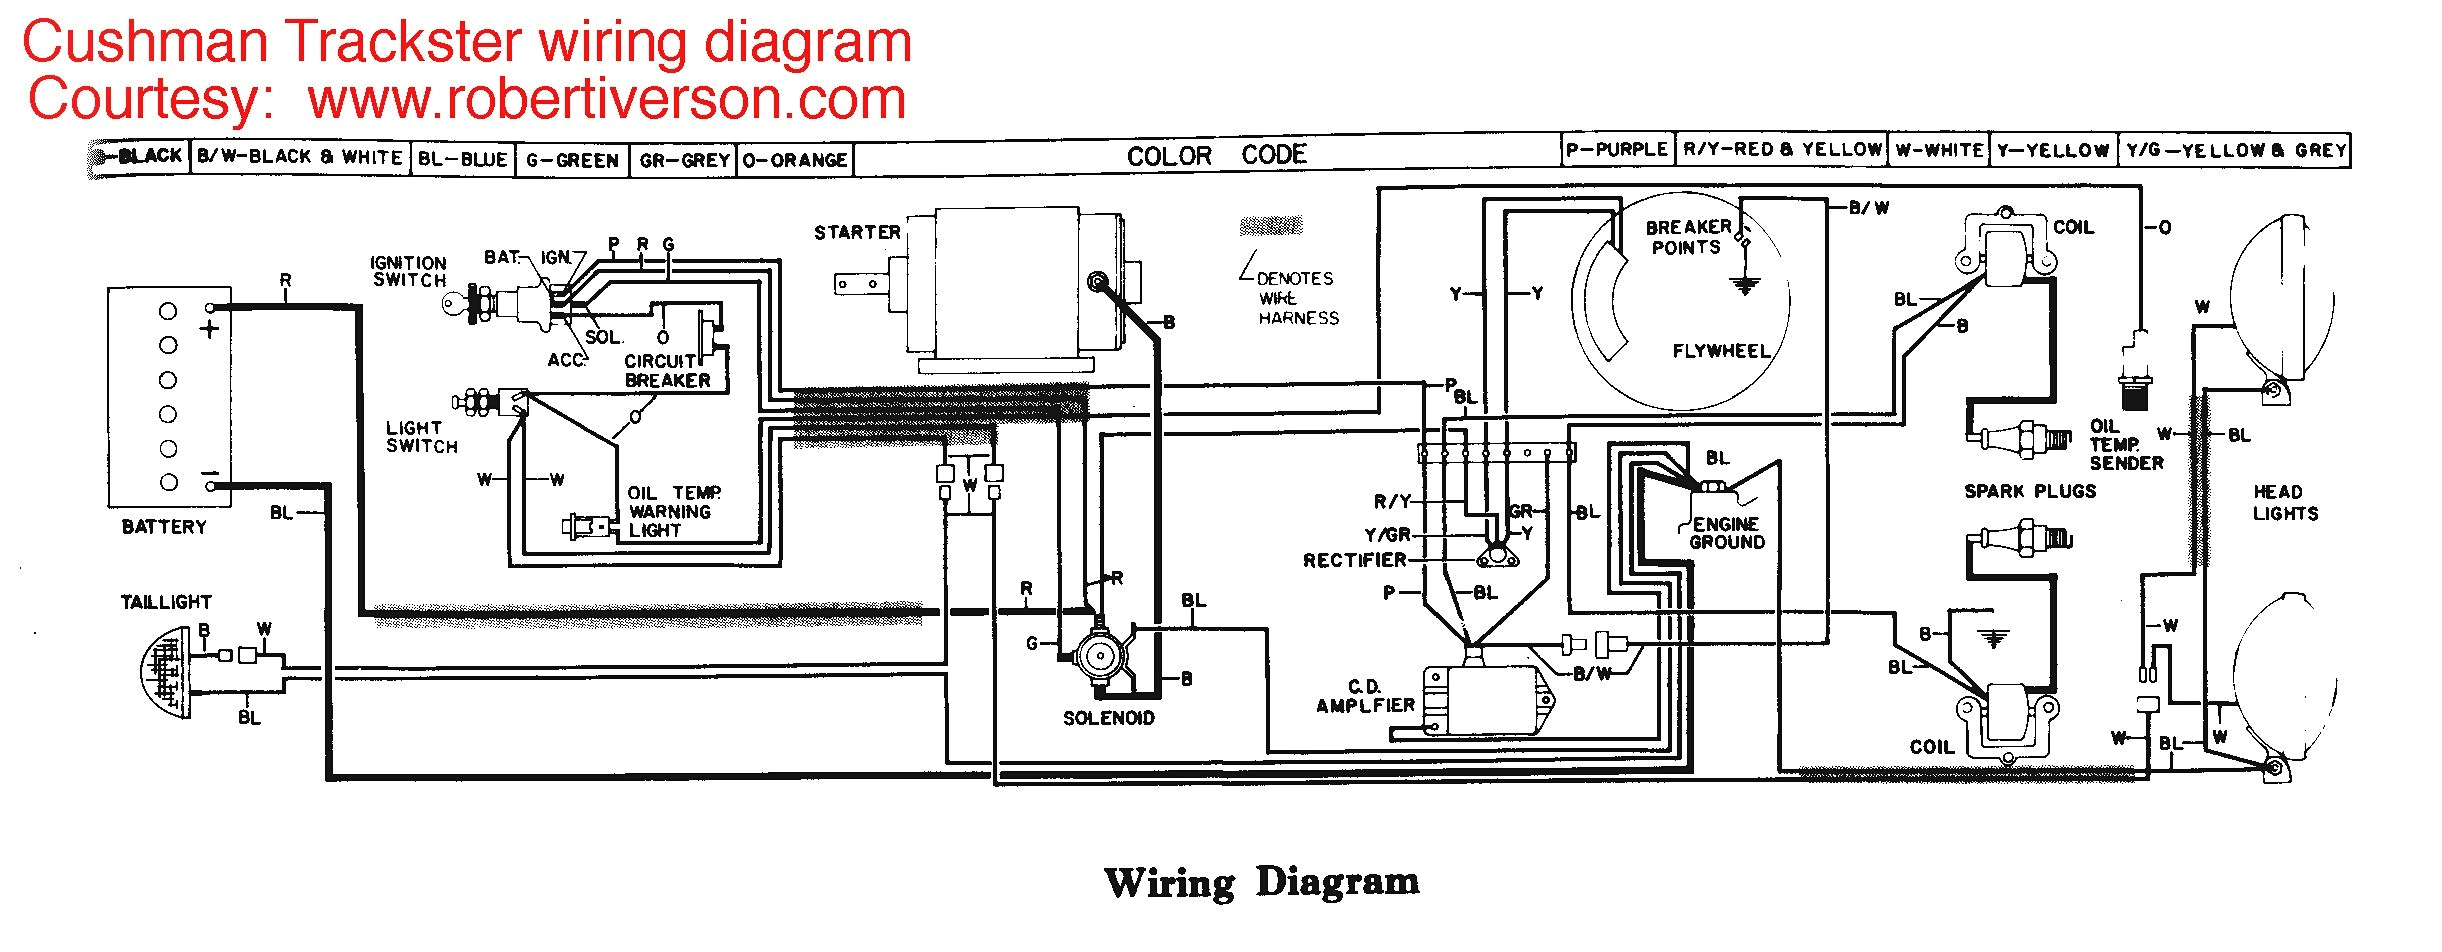 integrated led light wiring diagram basic electronics wiring diagram integrated led light wiring diagram